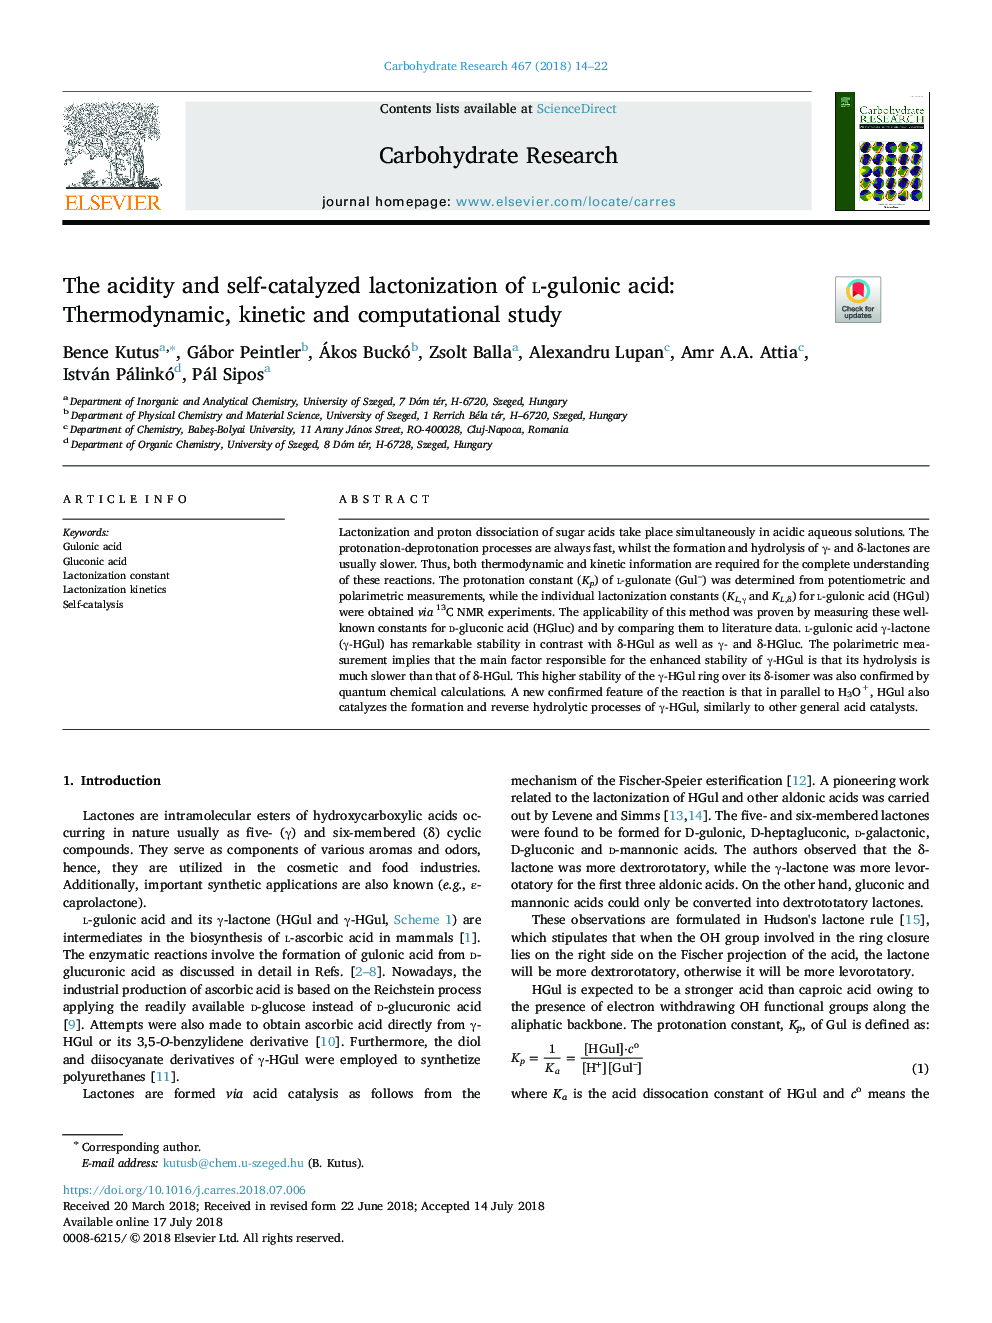 The acidity and self-catalyzed lactonization of l-gulonic acid: Thermodynamic, kinetic and computational study